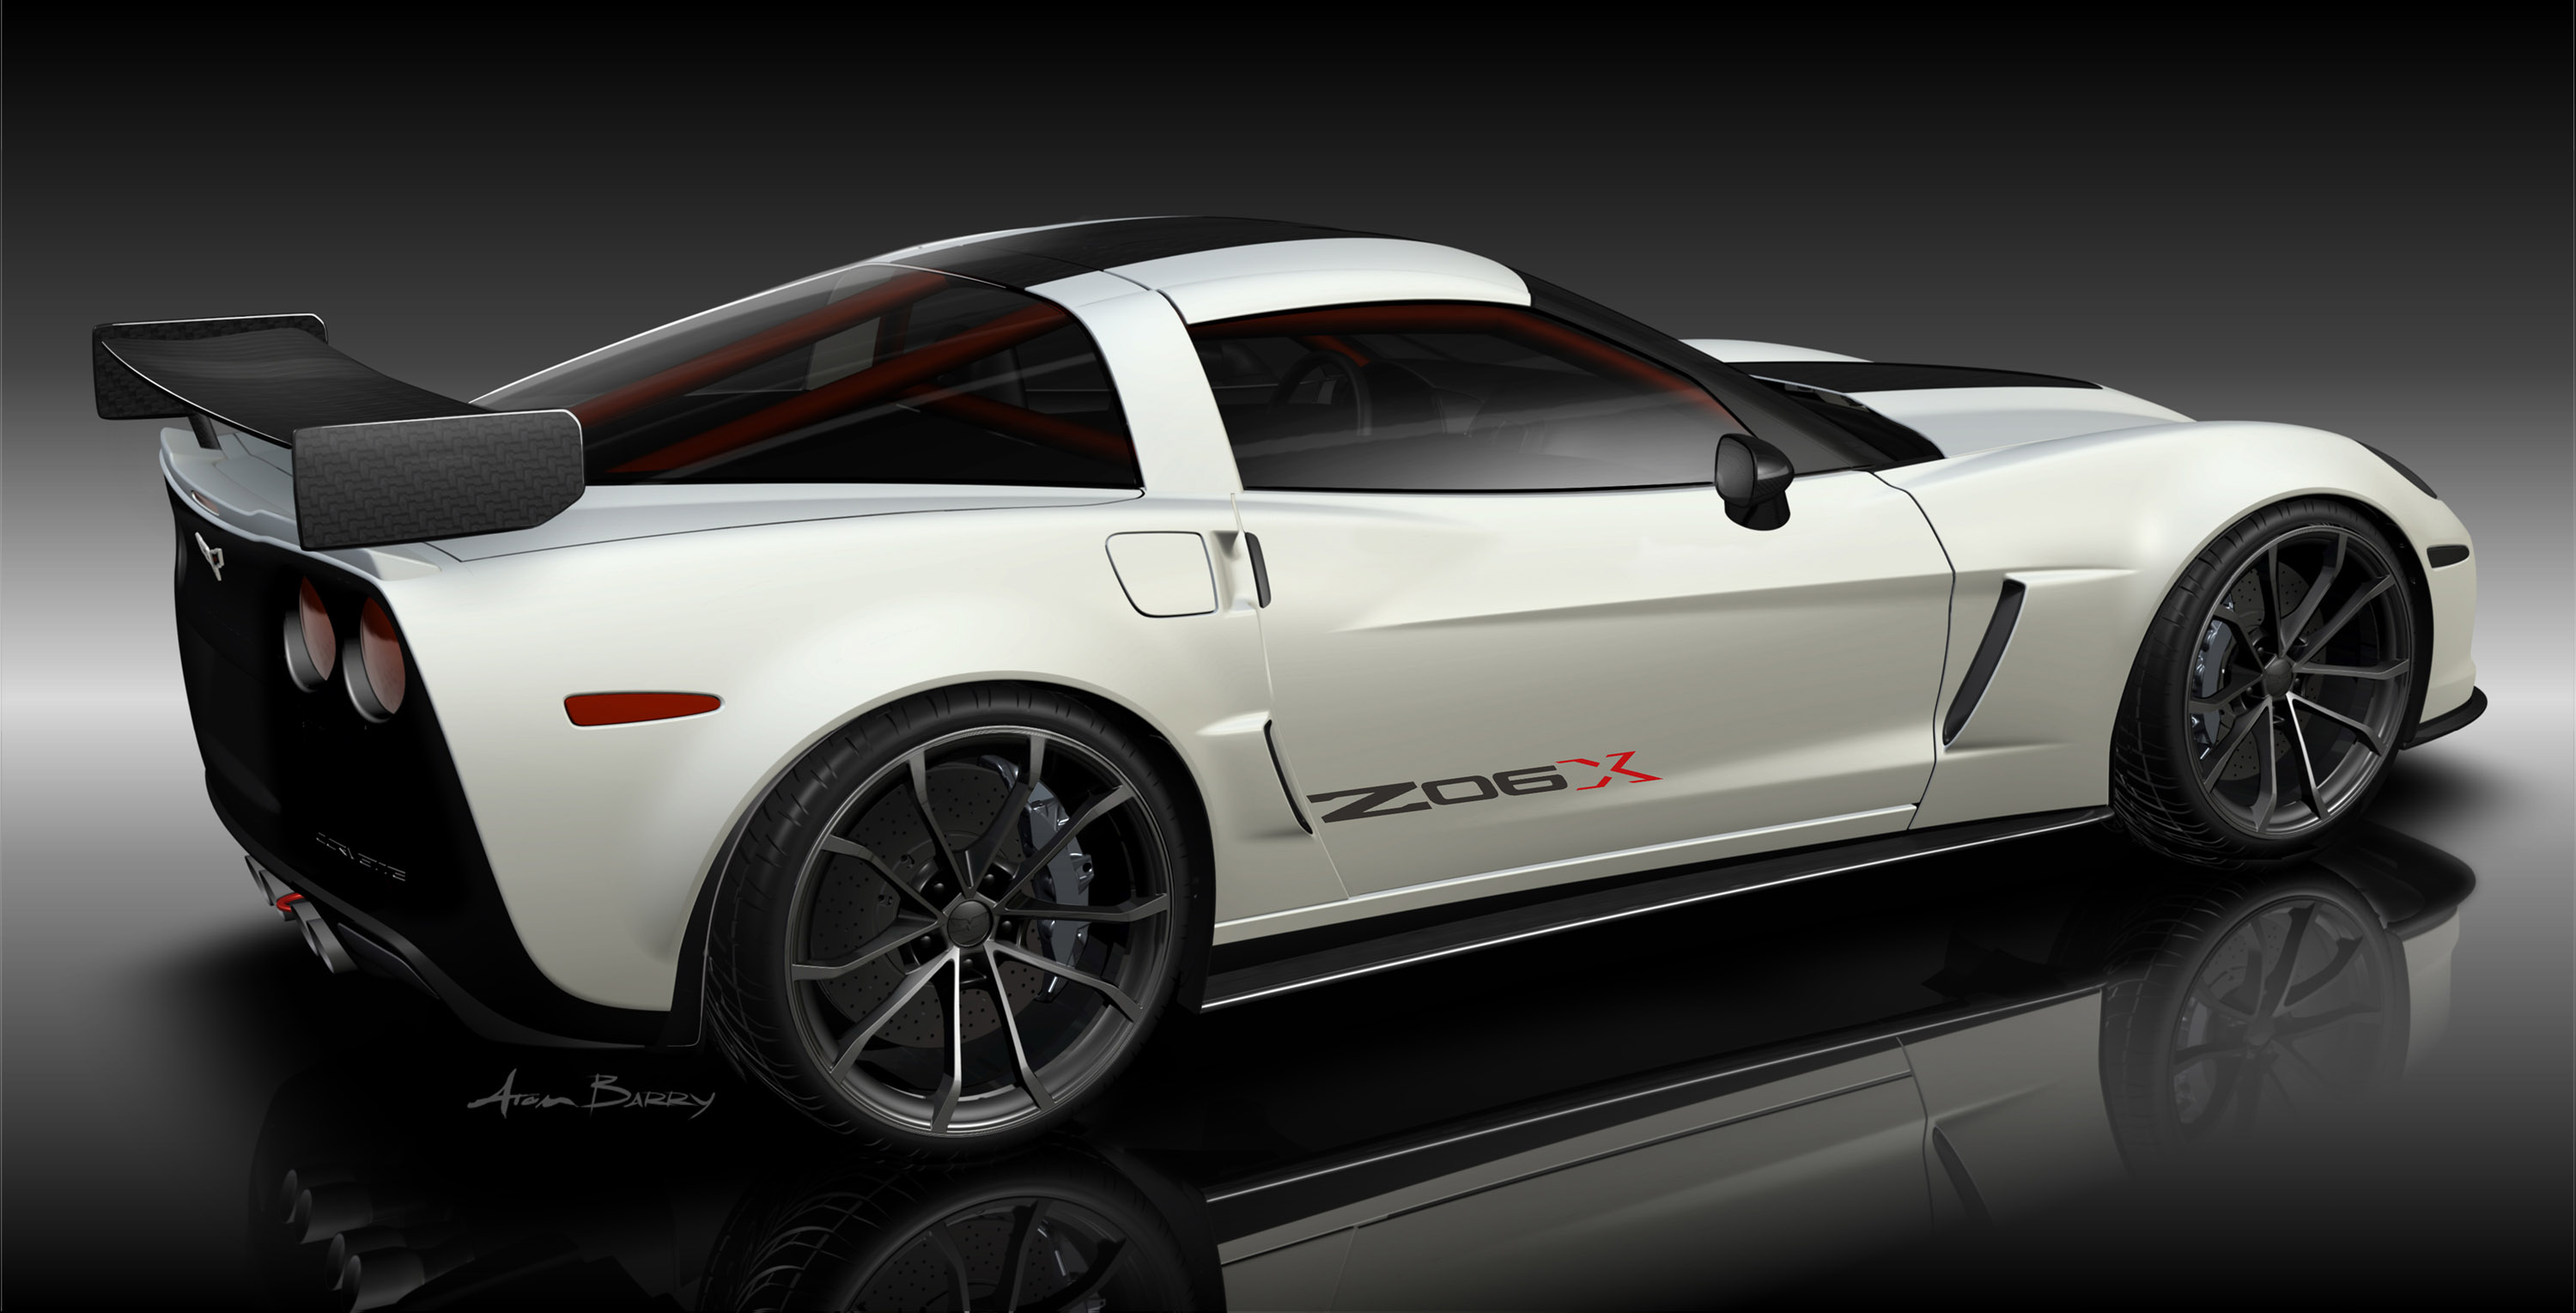 Corvette Z06x Track Car Concept Muscle Supercar Supercars Multi Dual F